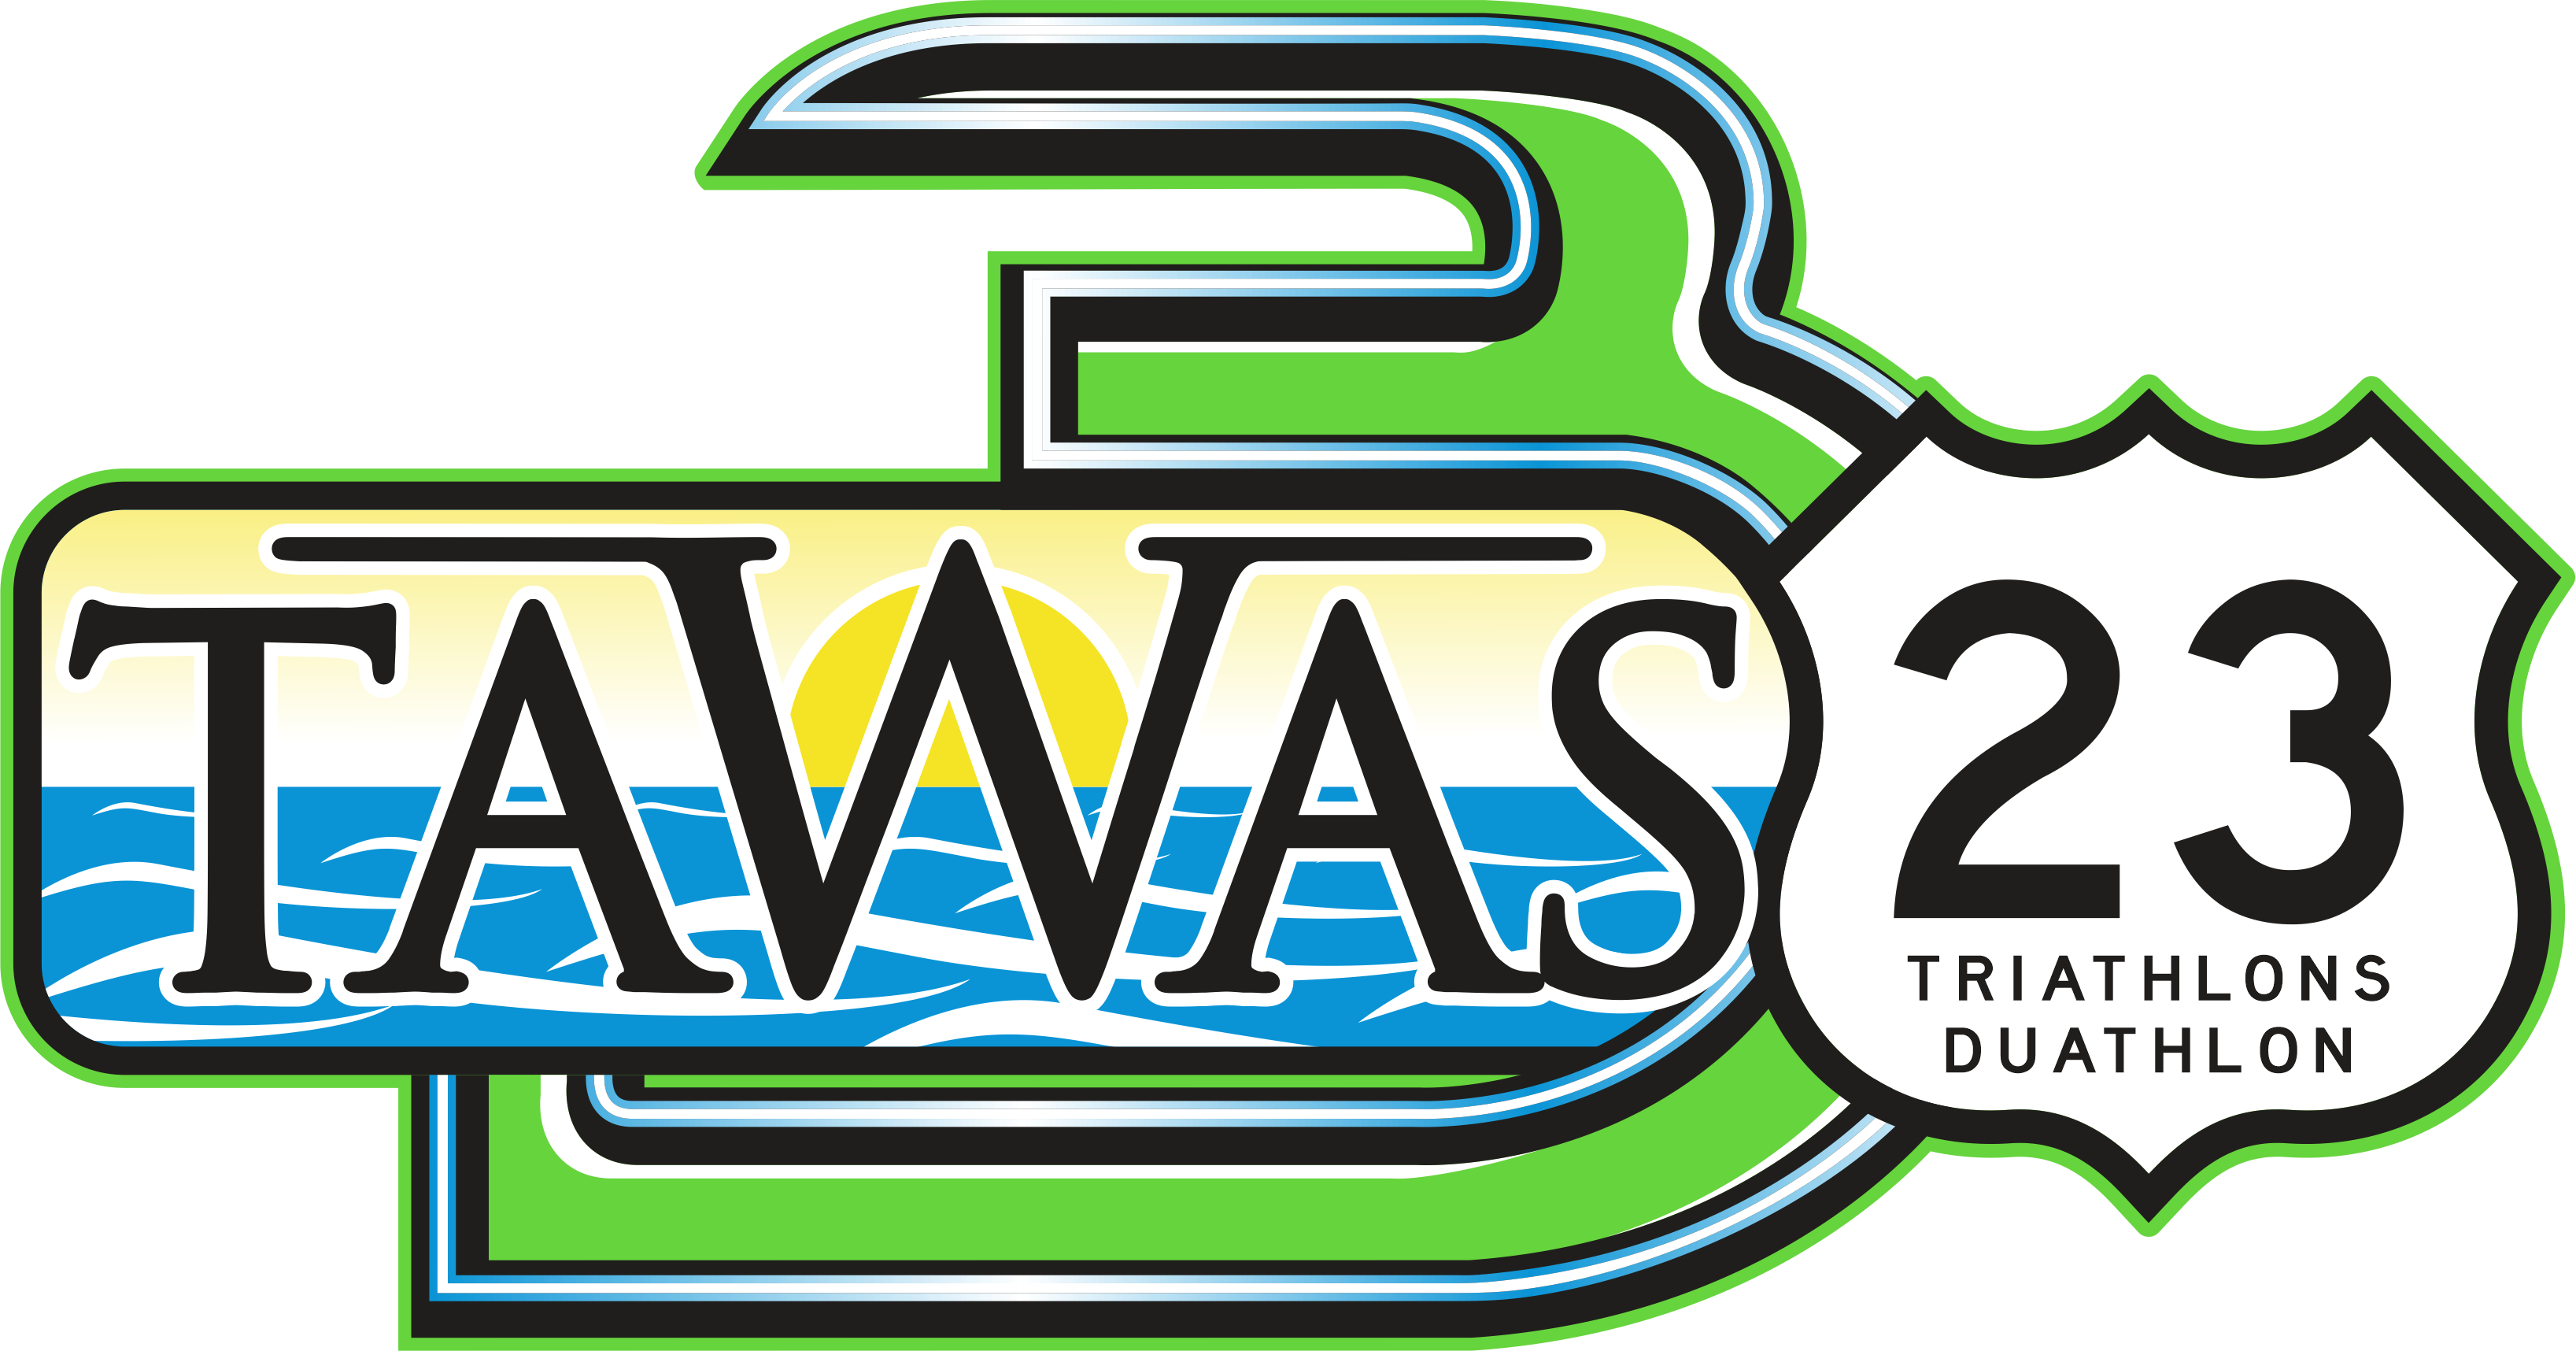 3-Disciplines-Tawas-23-Triathlons-City General Information